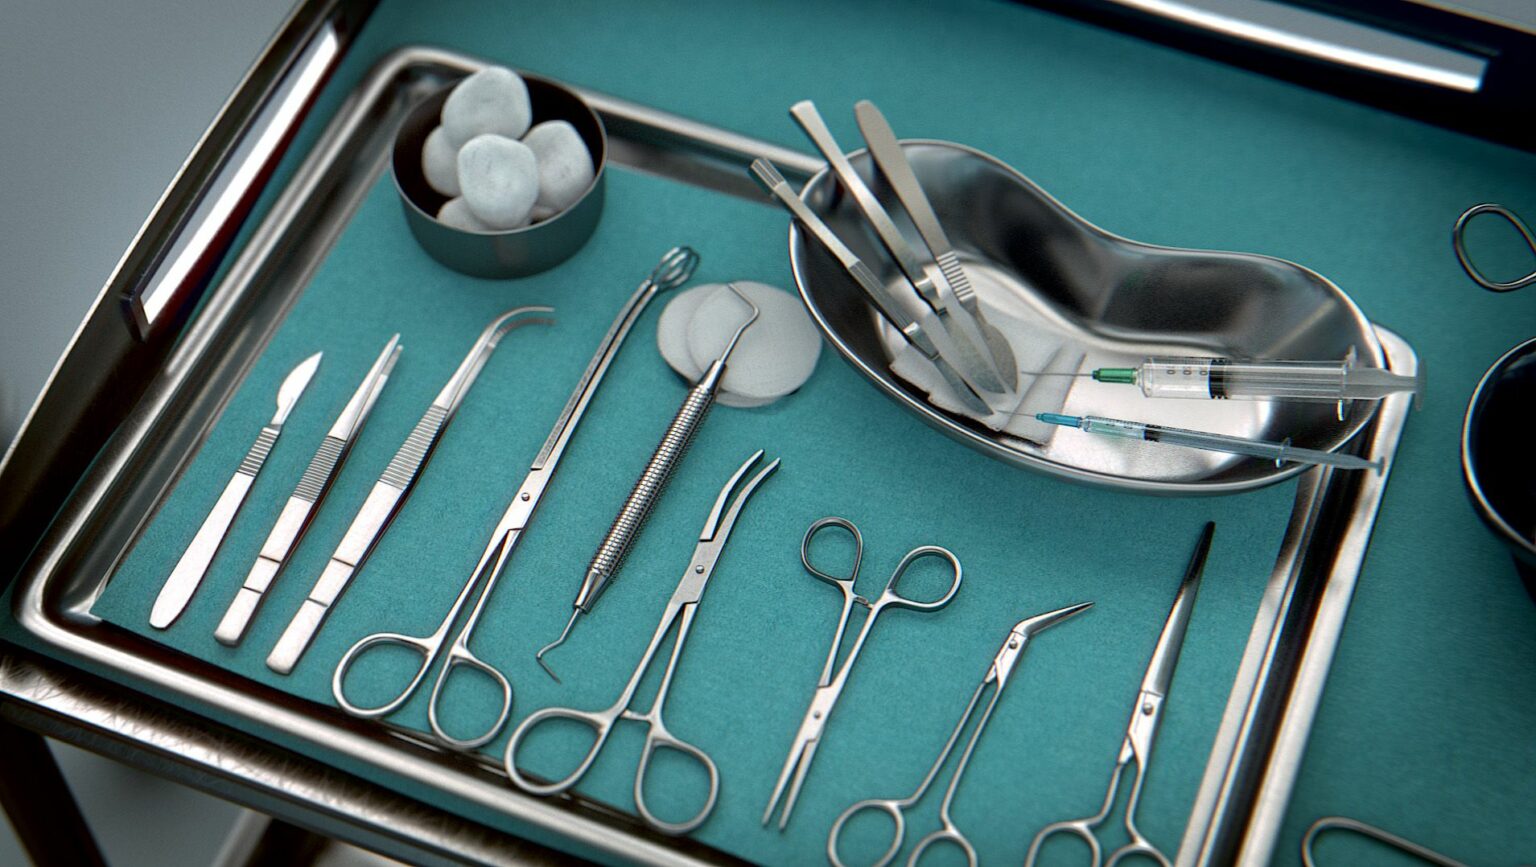 Hopital Equipment: Top 12 Esential Medical Equipment Every Hospital ...